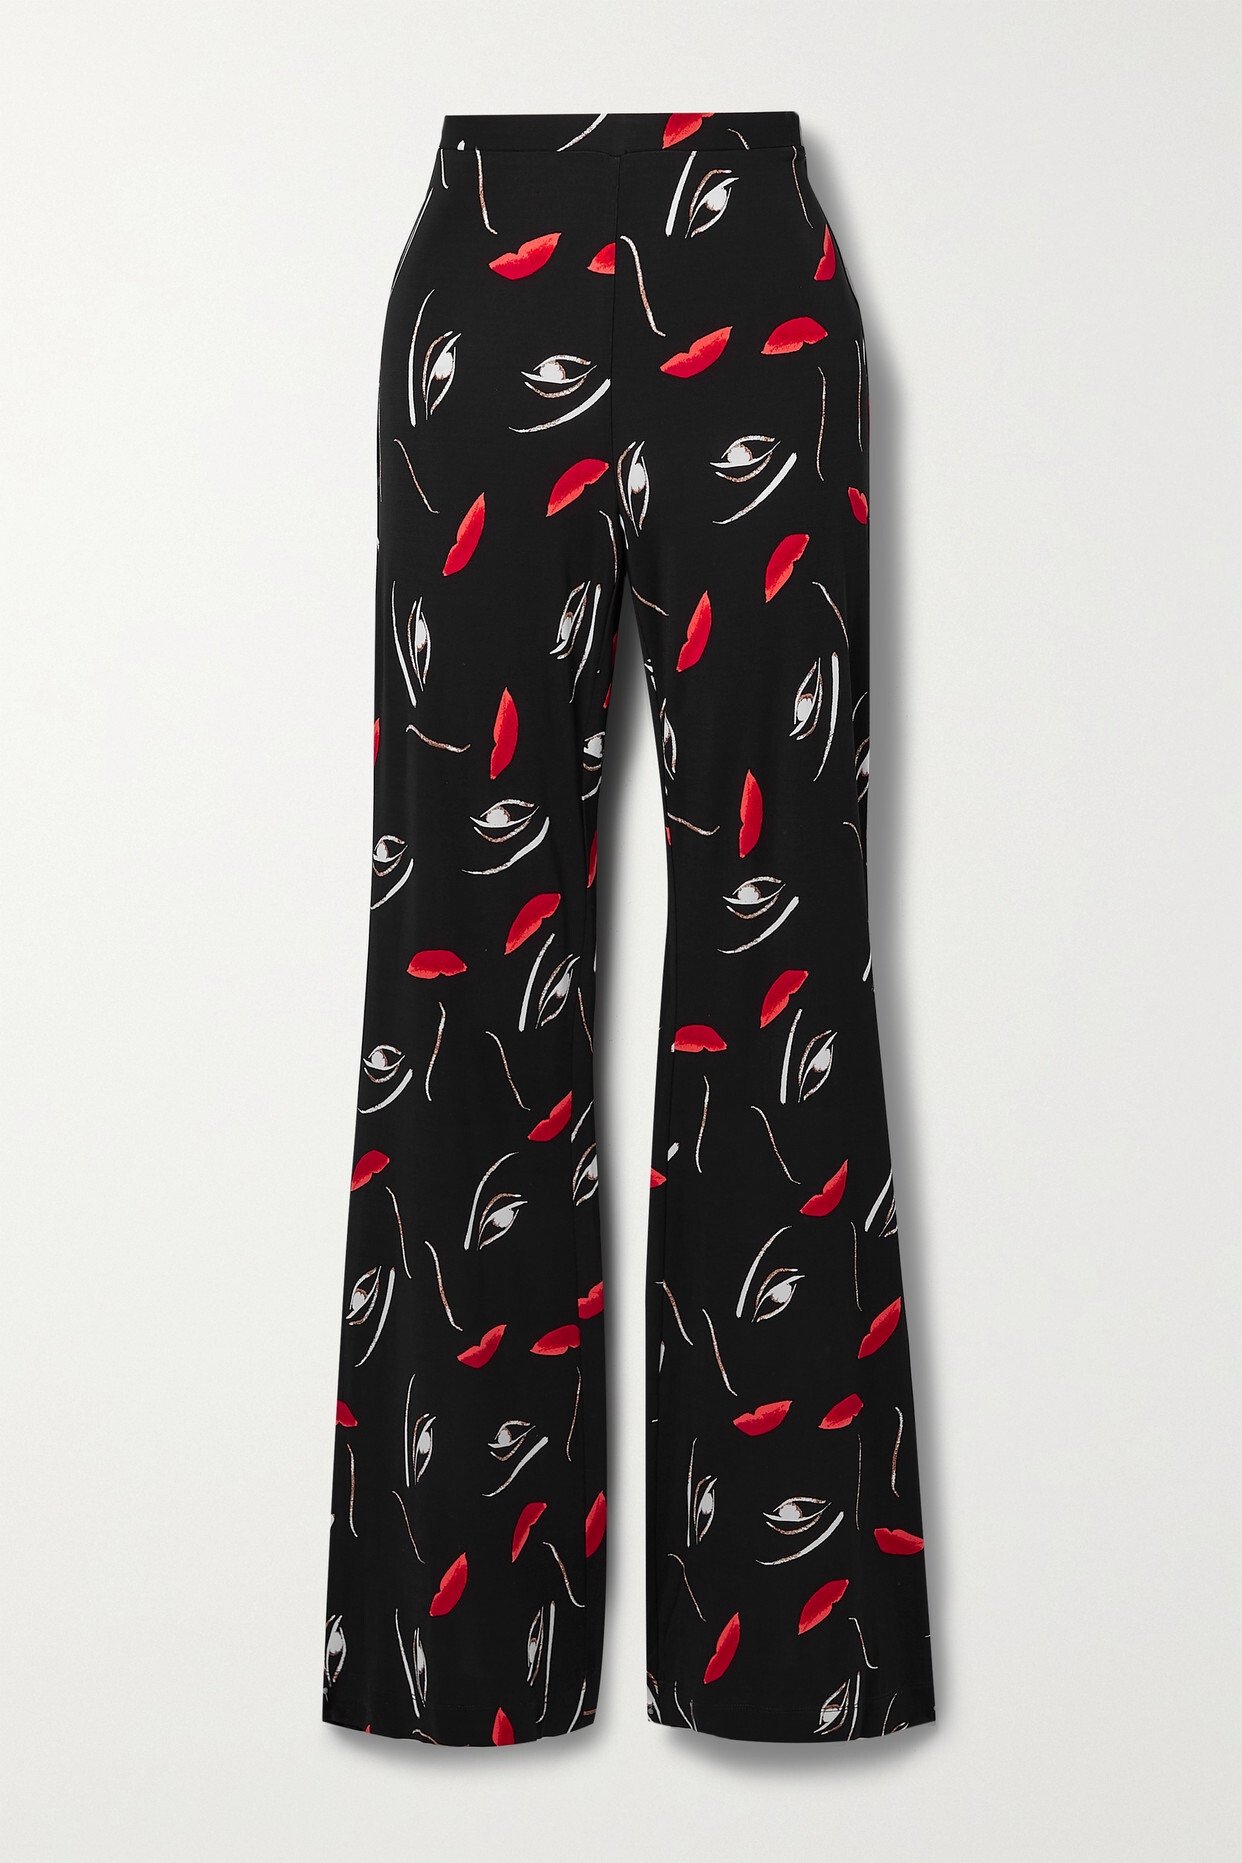 Diane von Furstenberg - Brooklyn Printed Stretch-jersey Flared Pants - Black